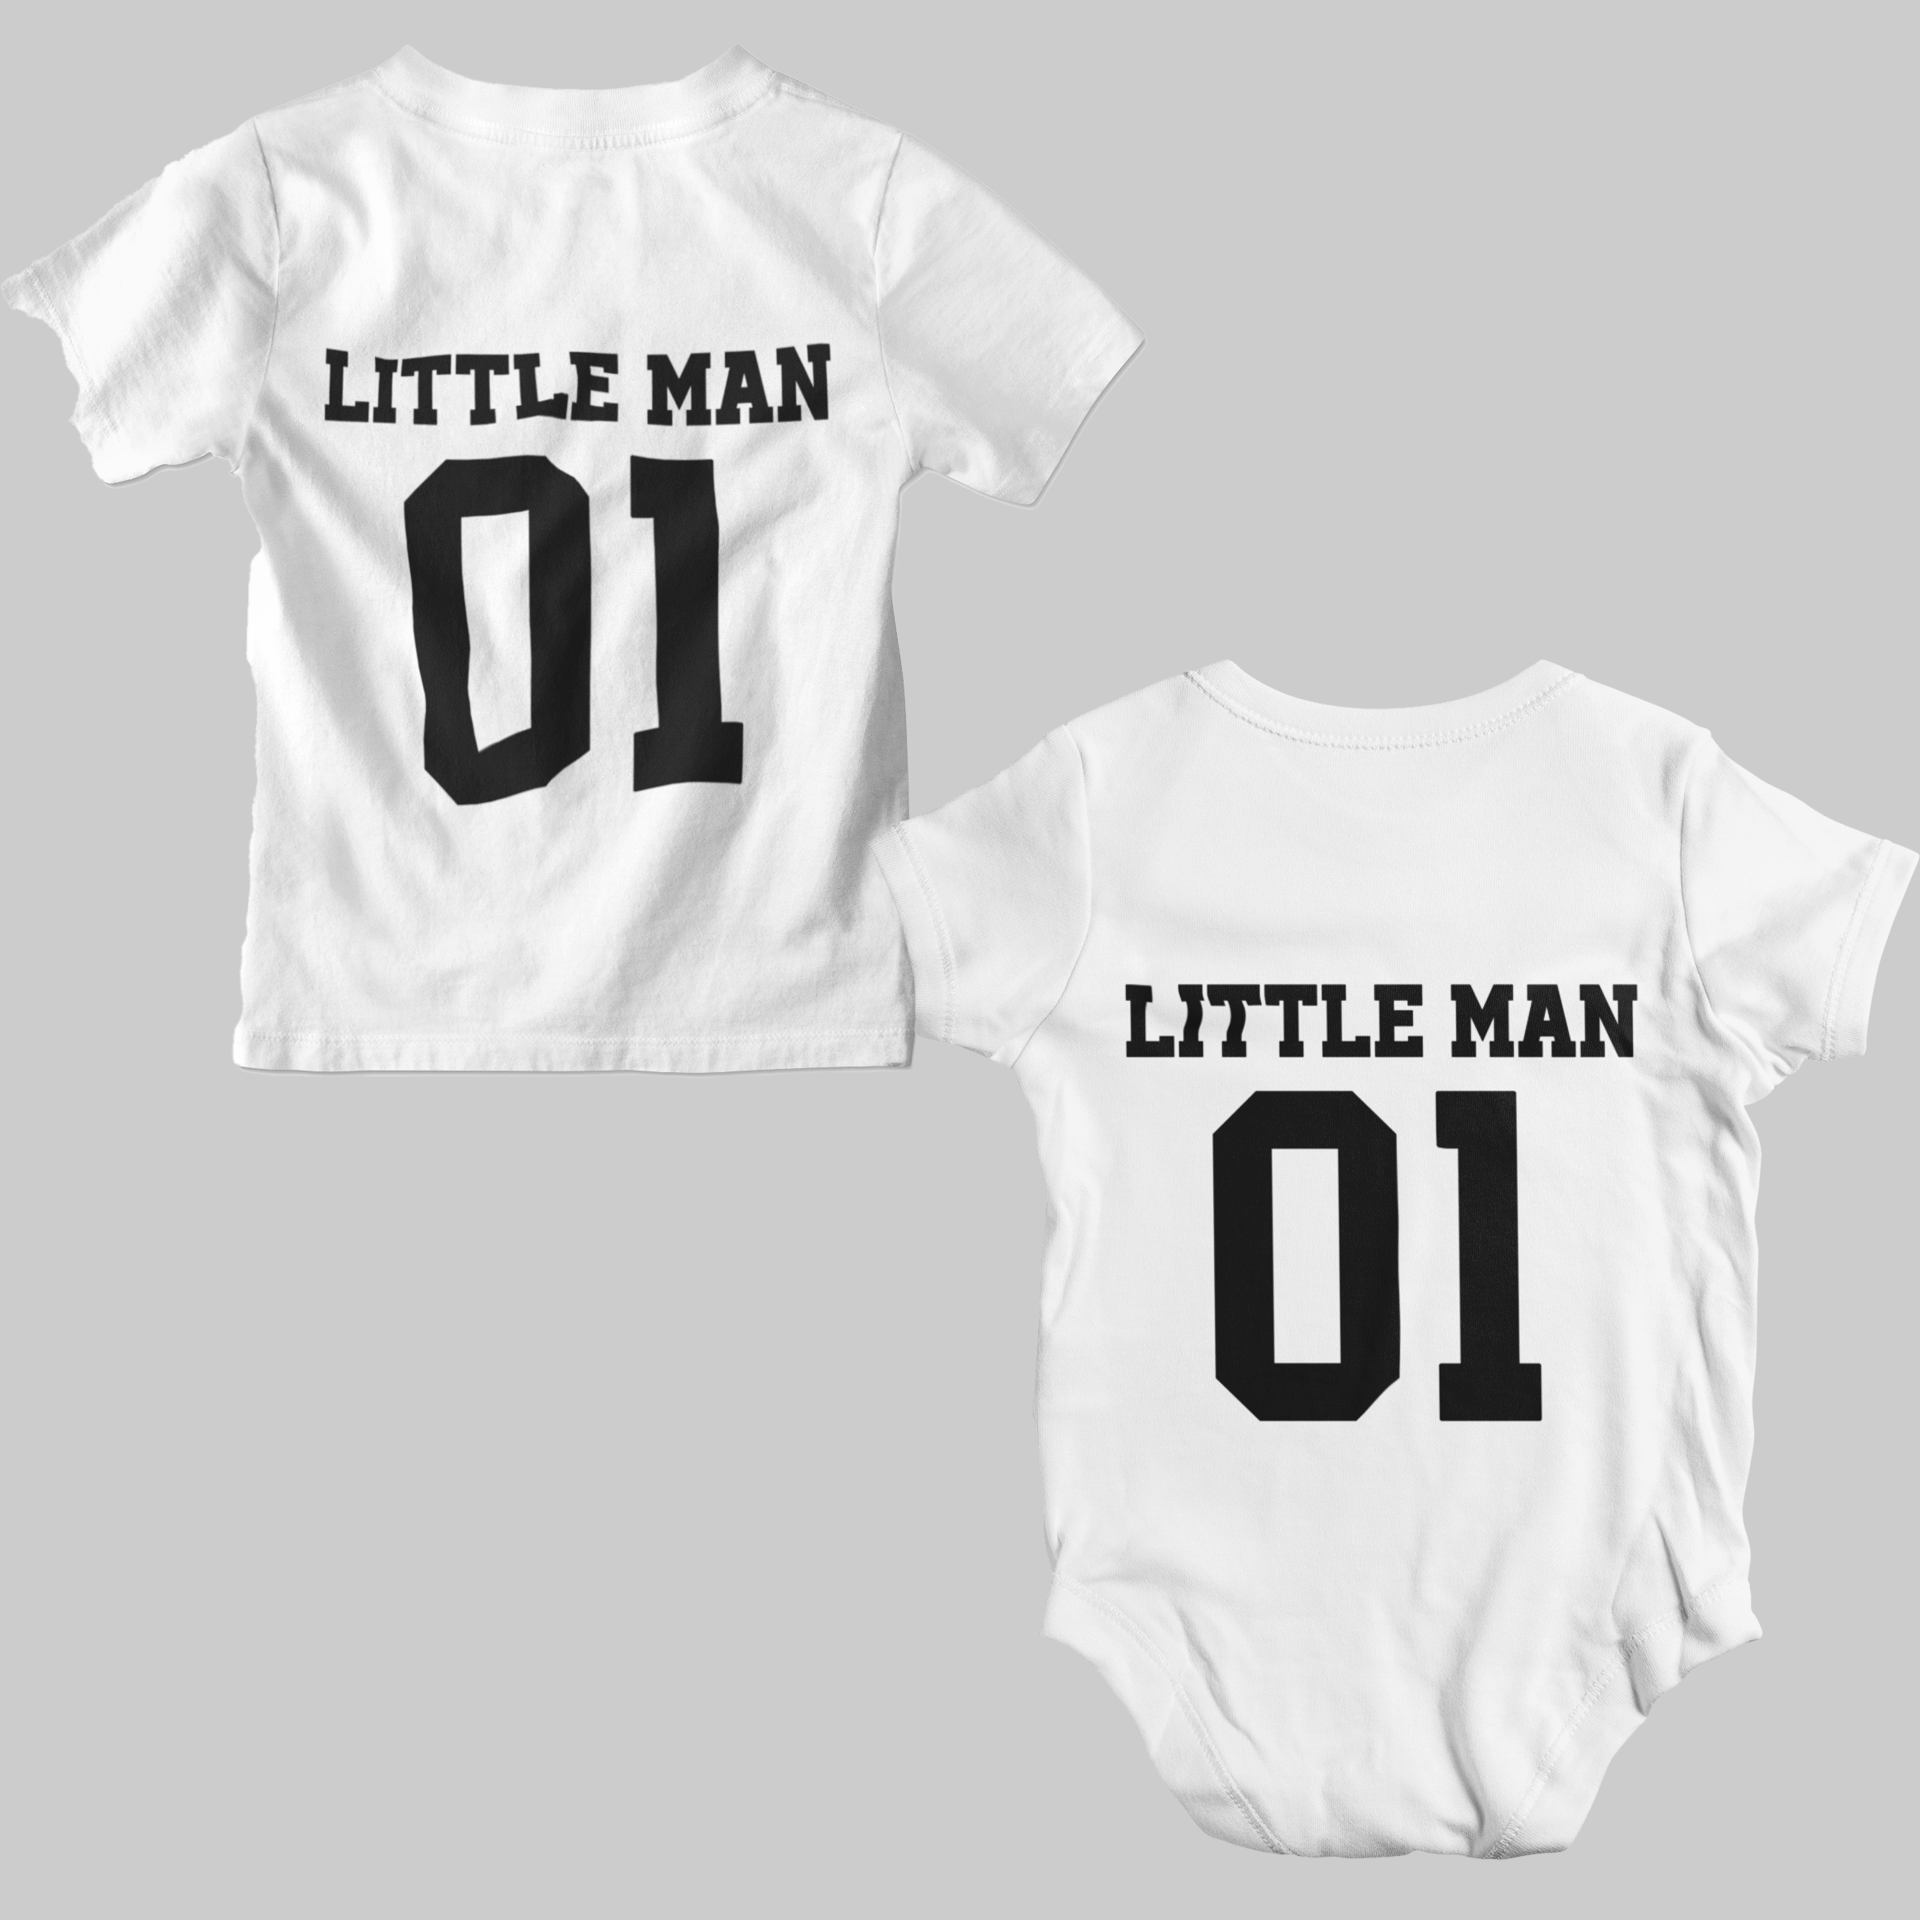 Little Man Big Man White & Black Number Combo - Adult Tshirt + Full Romper